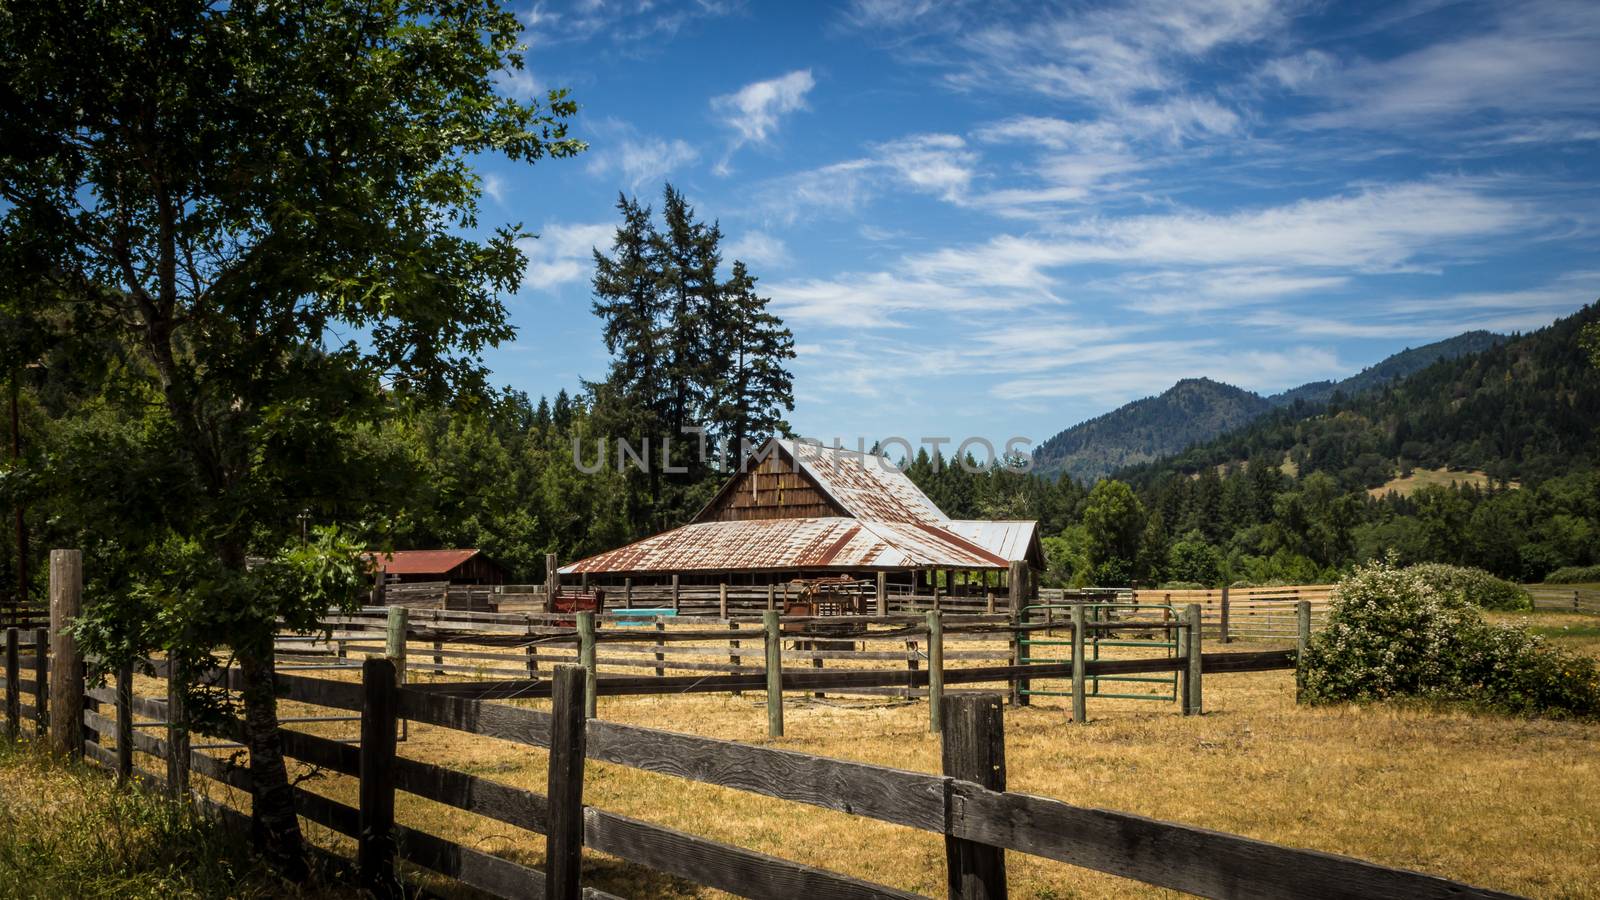 Quiet Farm by backyard_photography